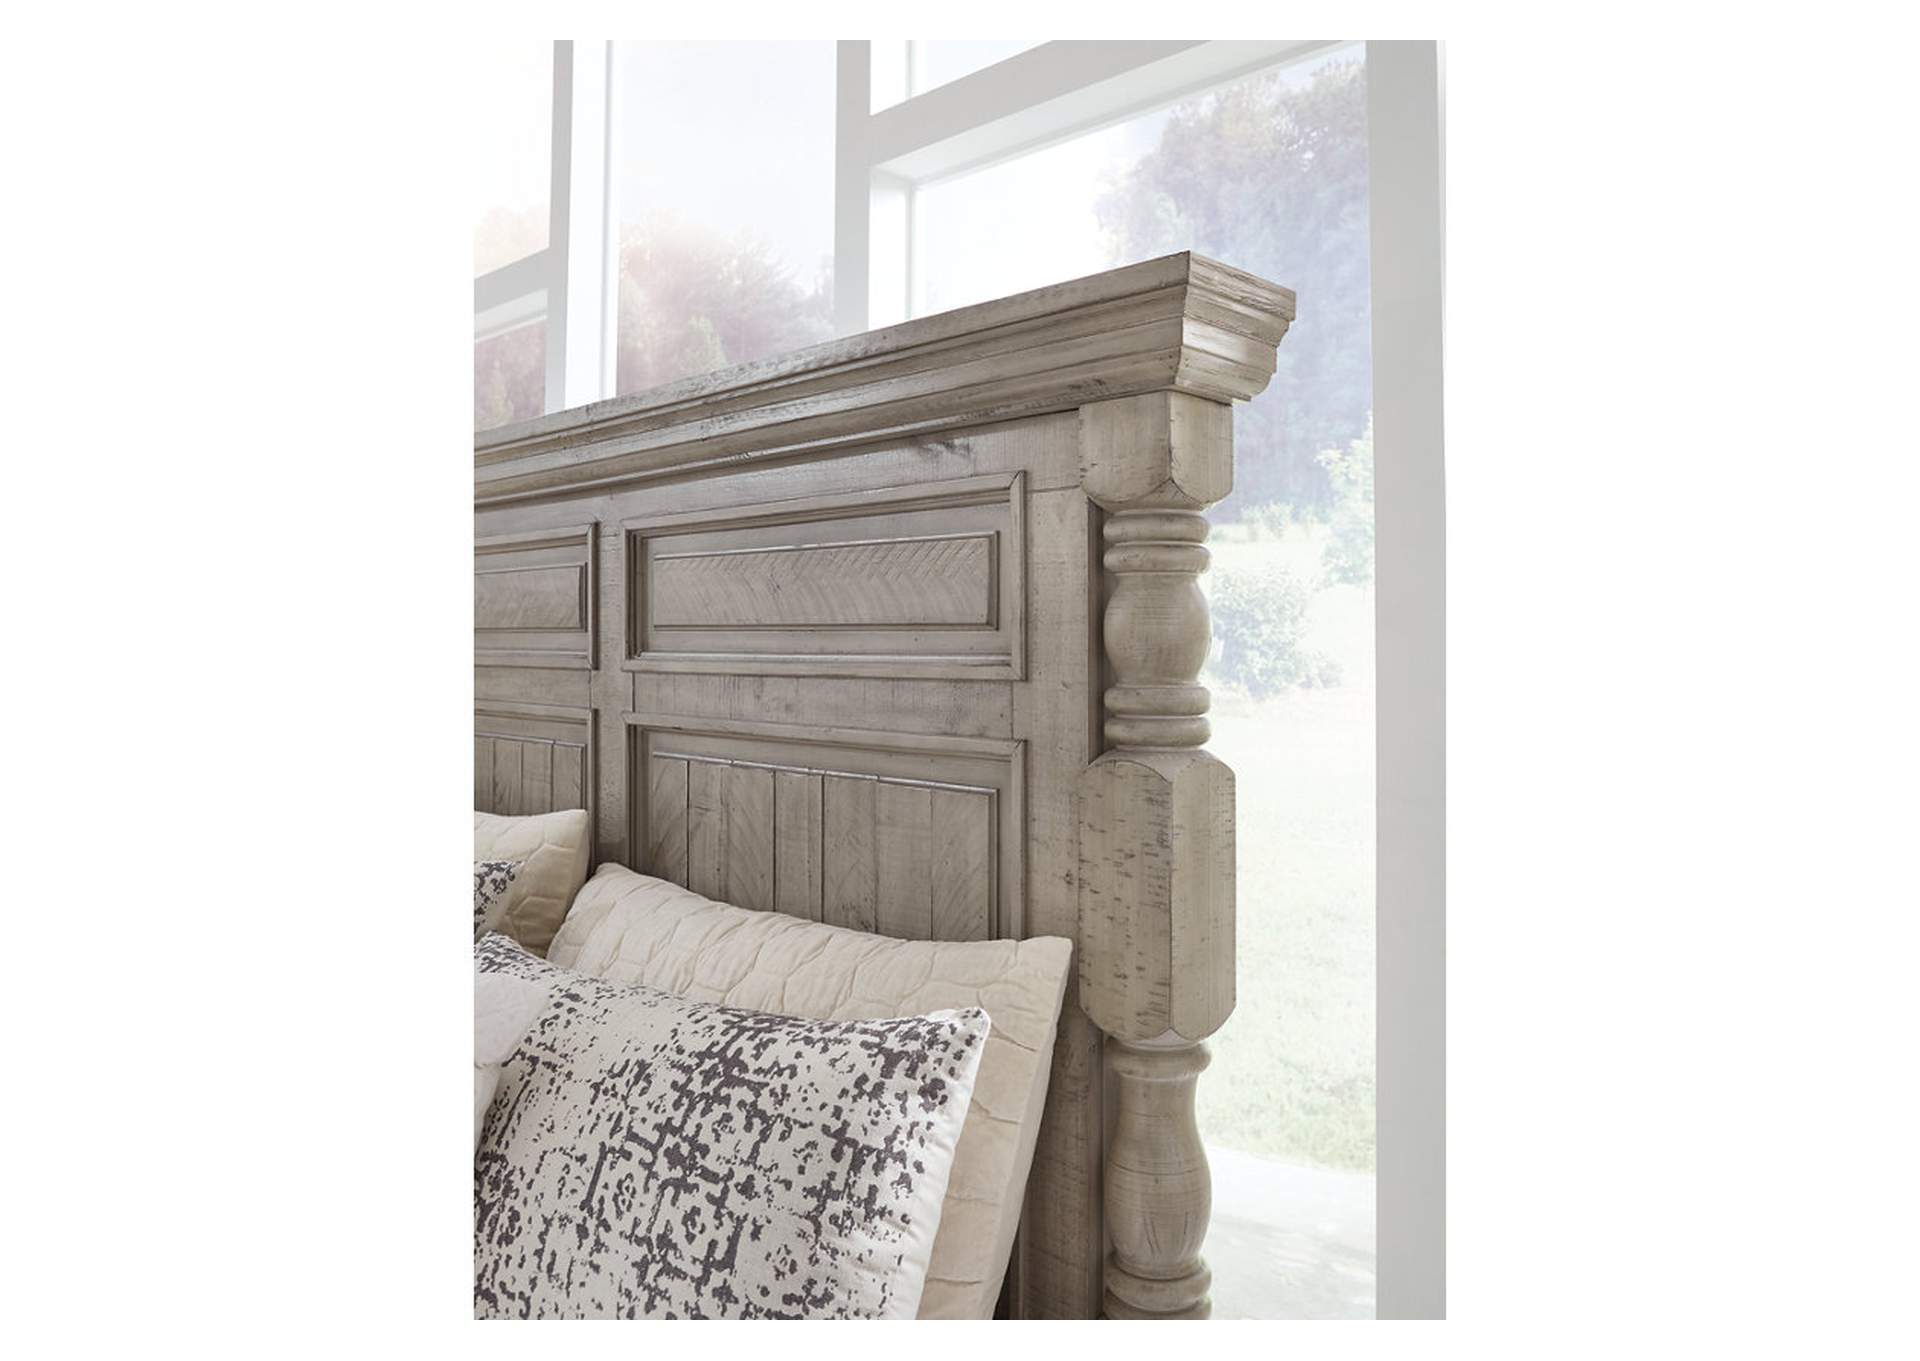 Harrastone King Panel Bed with Dresser,Millennium